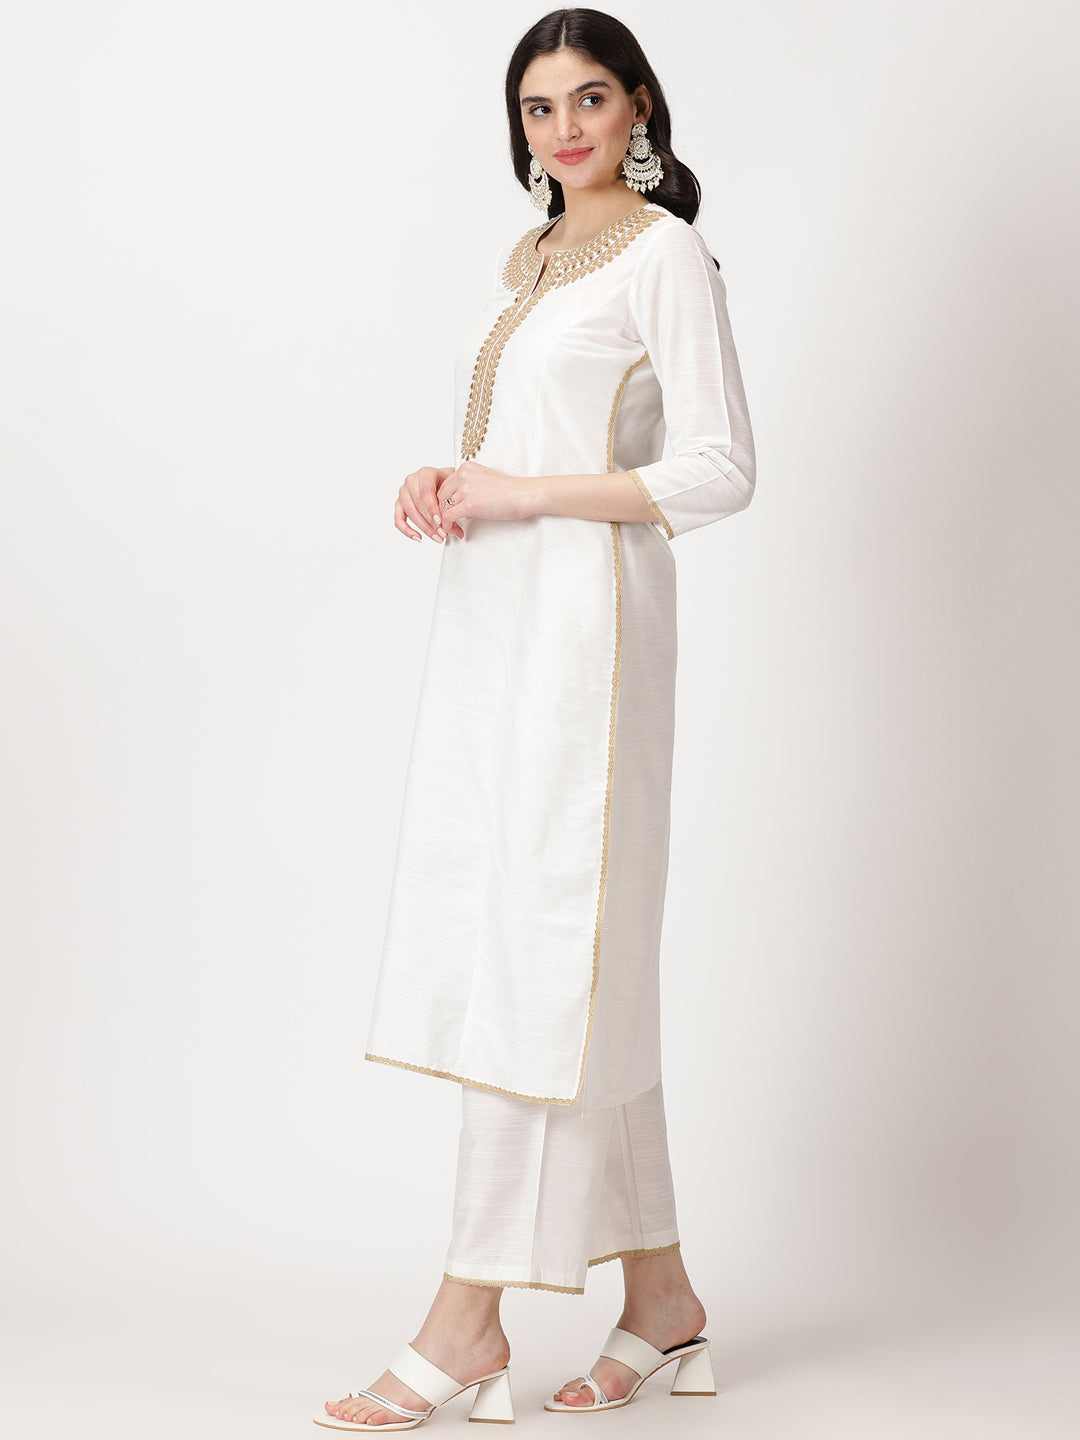 Daily wear cotton salwar plazo suit with dupatta design | kurti design 2023 |#2023 #indian #fashion | Kurti designs, Cotton suit designs, Blouse designs